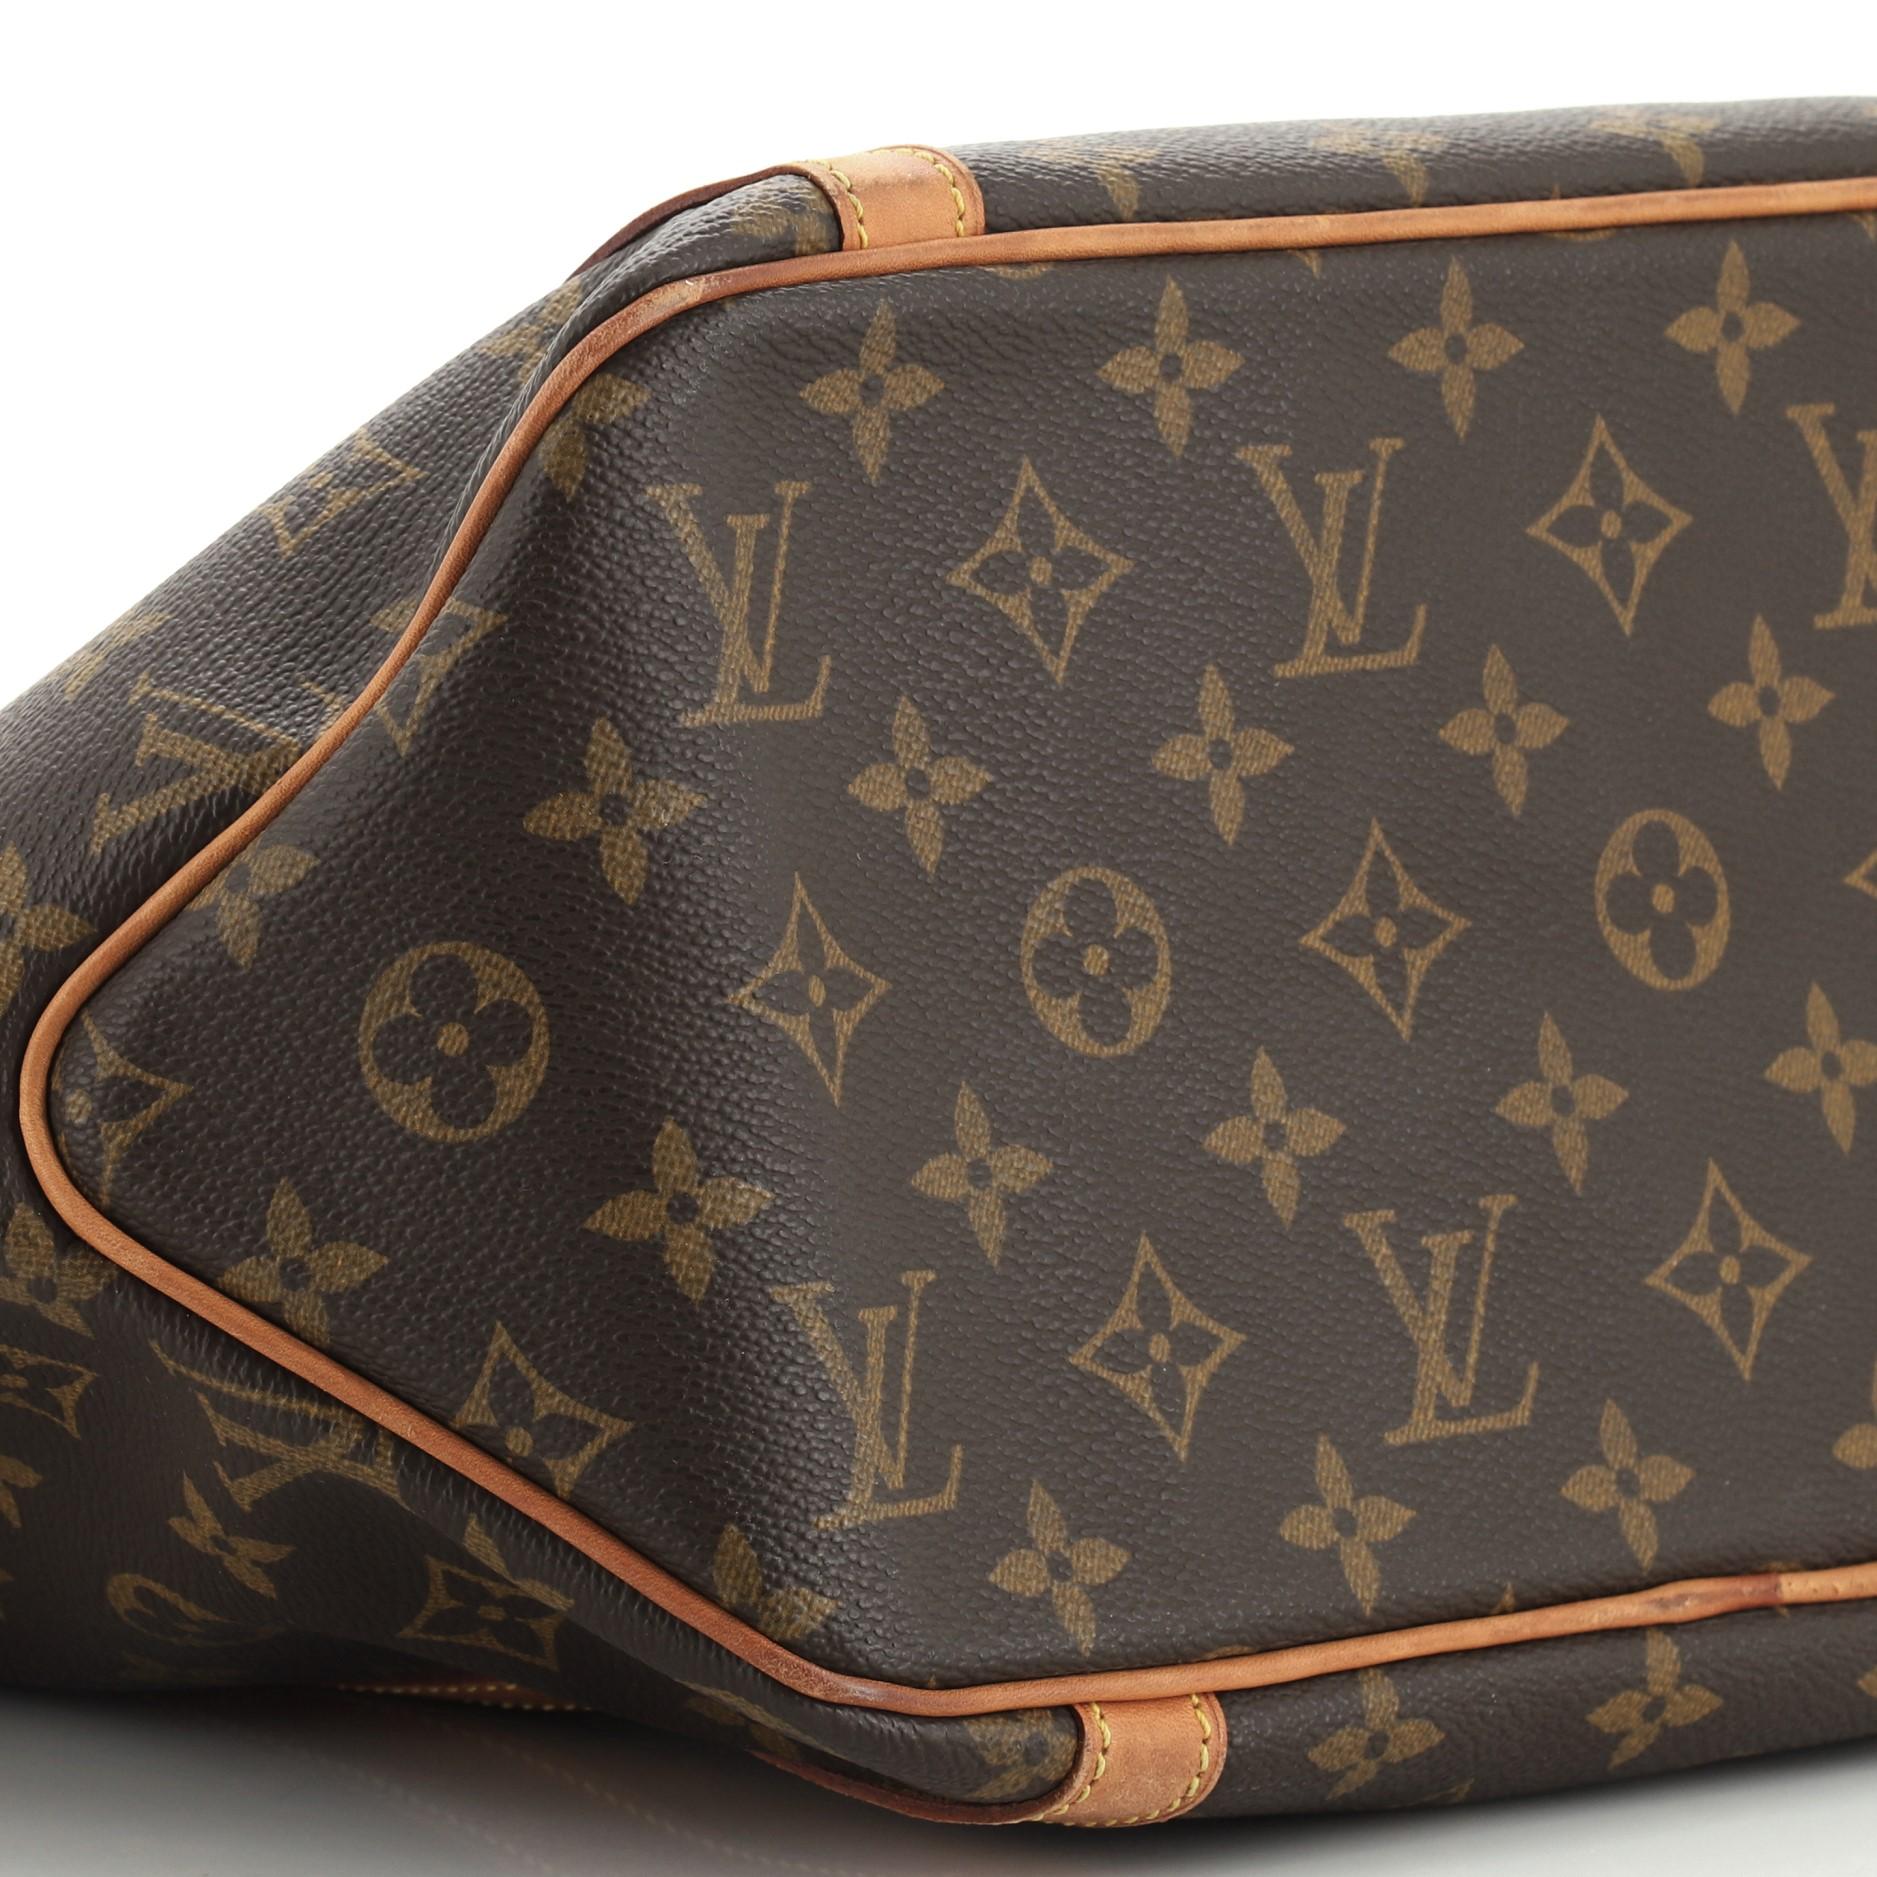  Louis Vuitton Shopping Sac Handbag Monogram Canvas MM 1